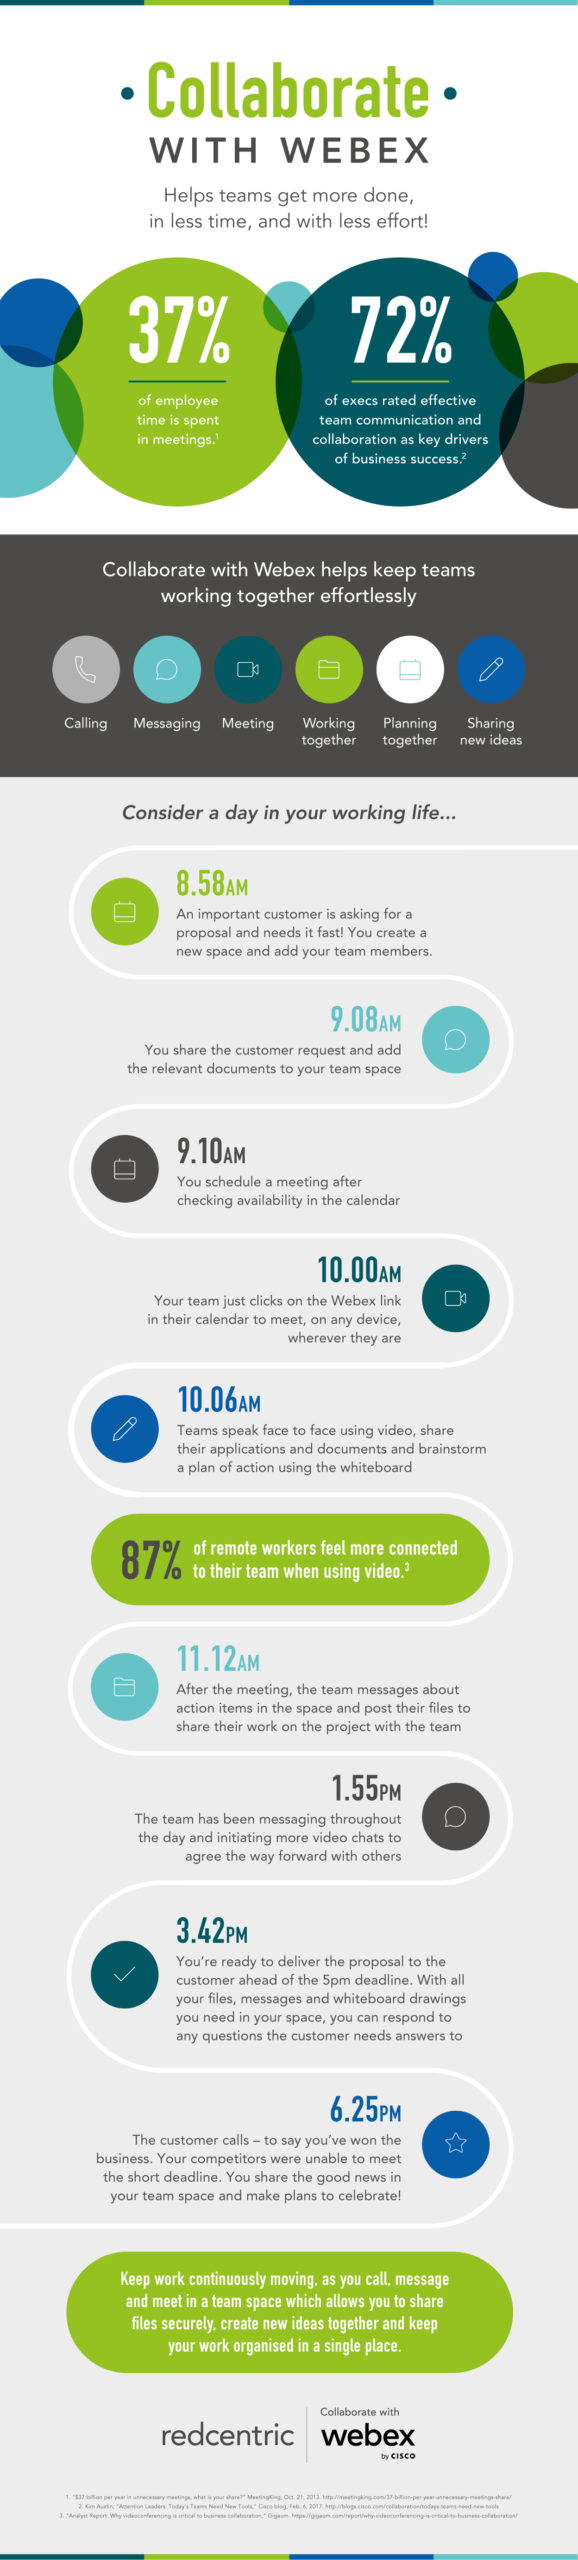 Cisco Webex working day infographic